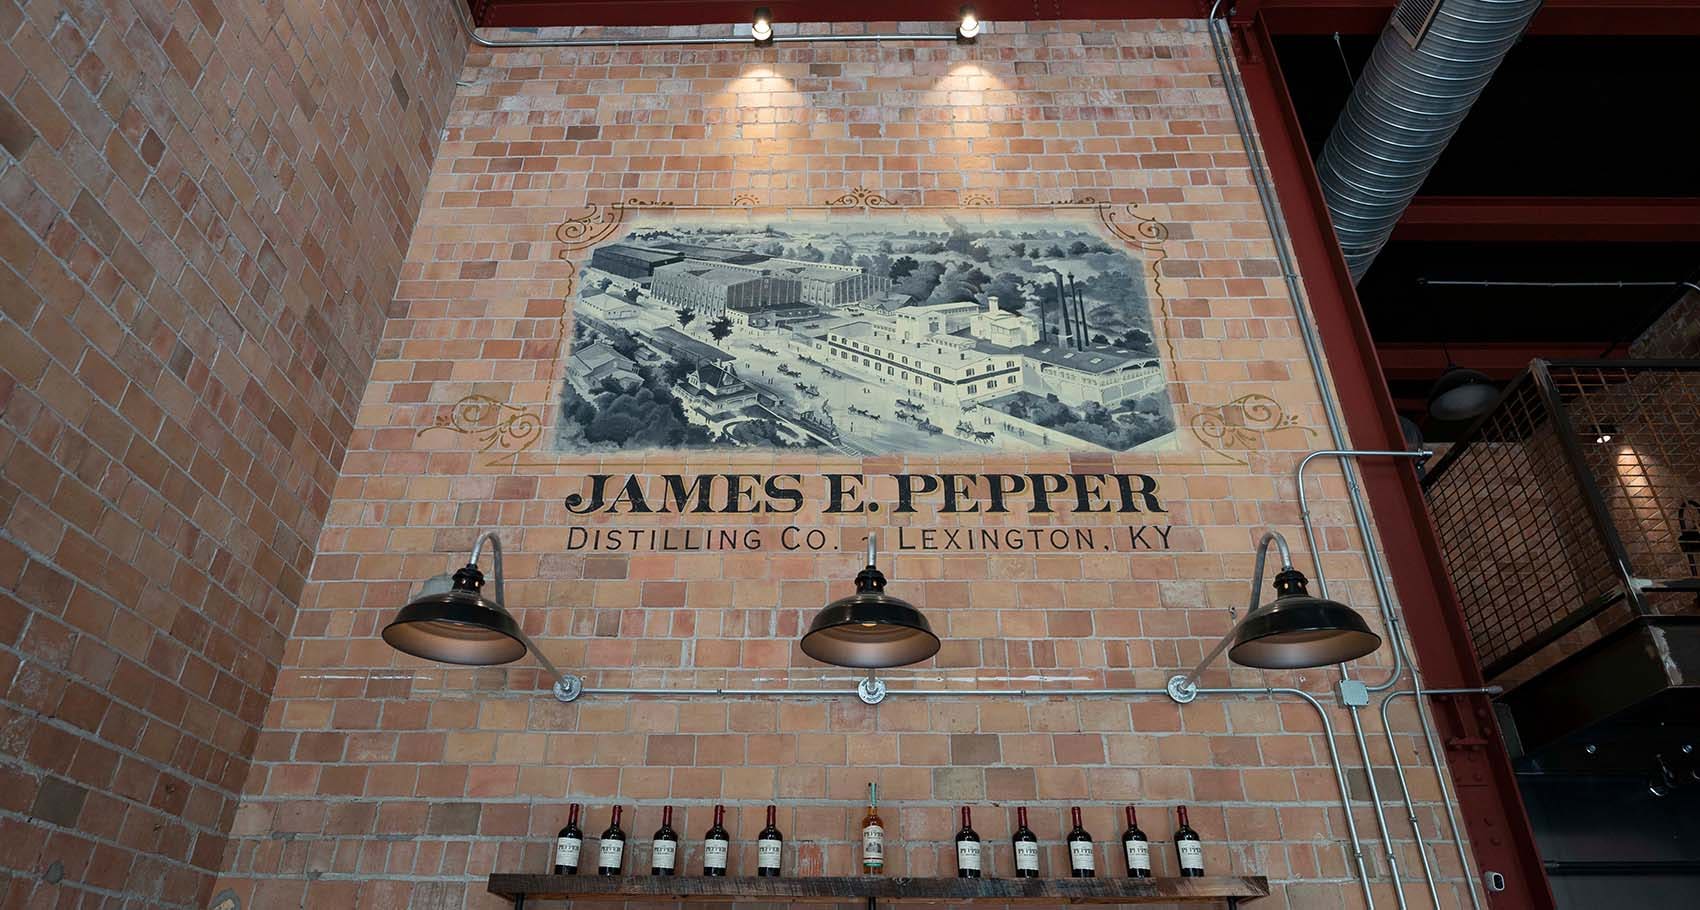 Inside shot of the Old Pepper Distillery with a ledge of bourbon bottles